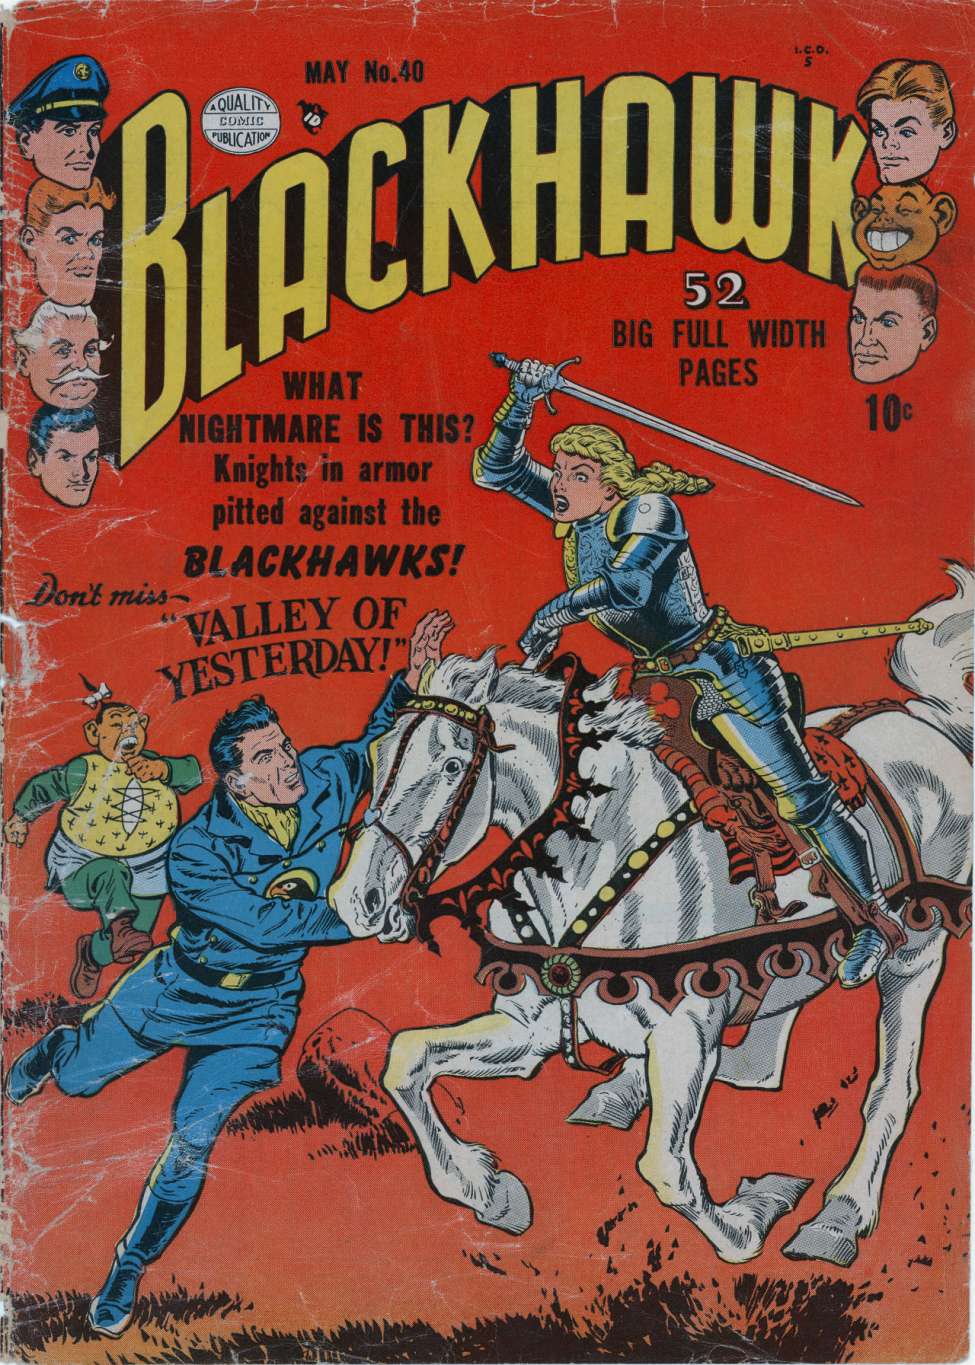 Comic Book Cover For Blackhawk 40